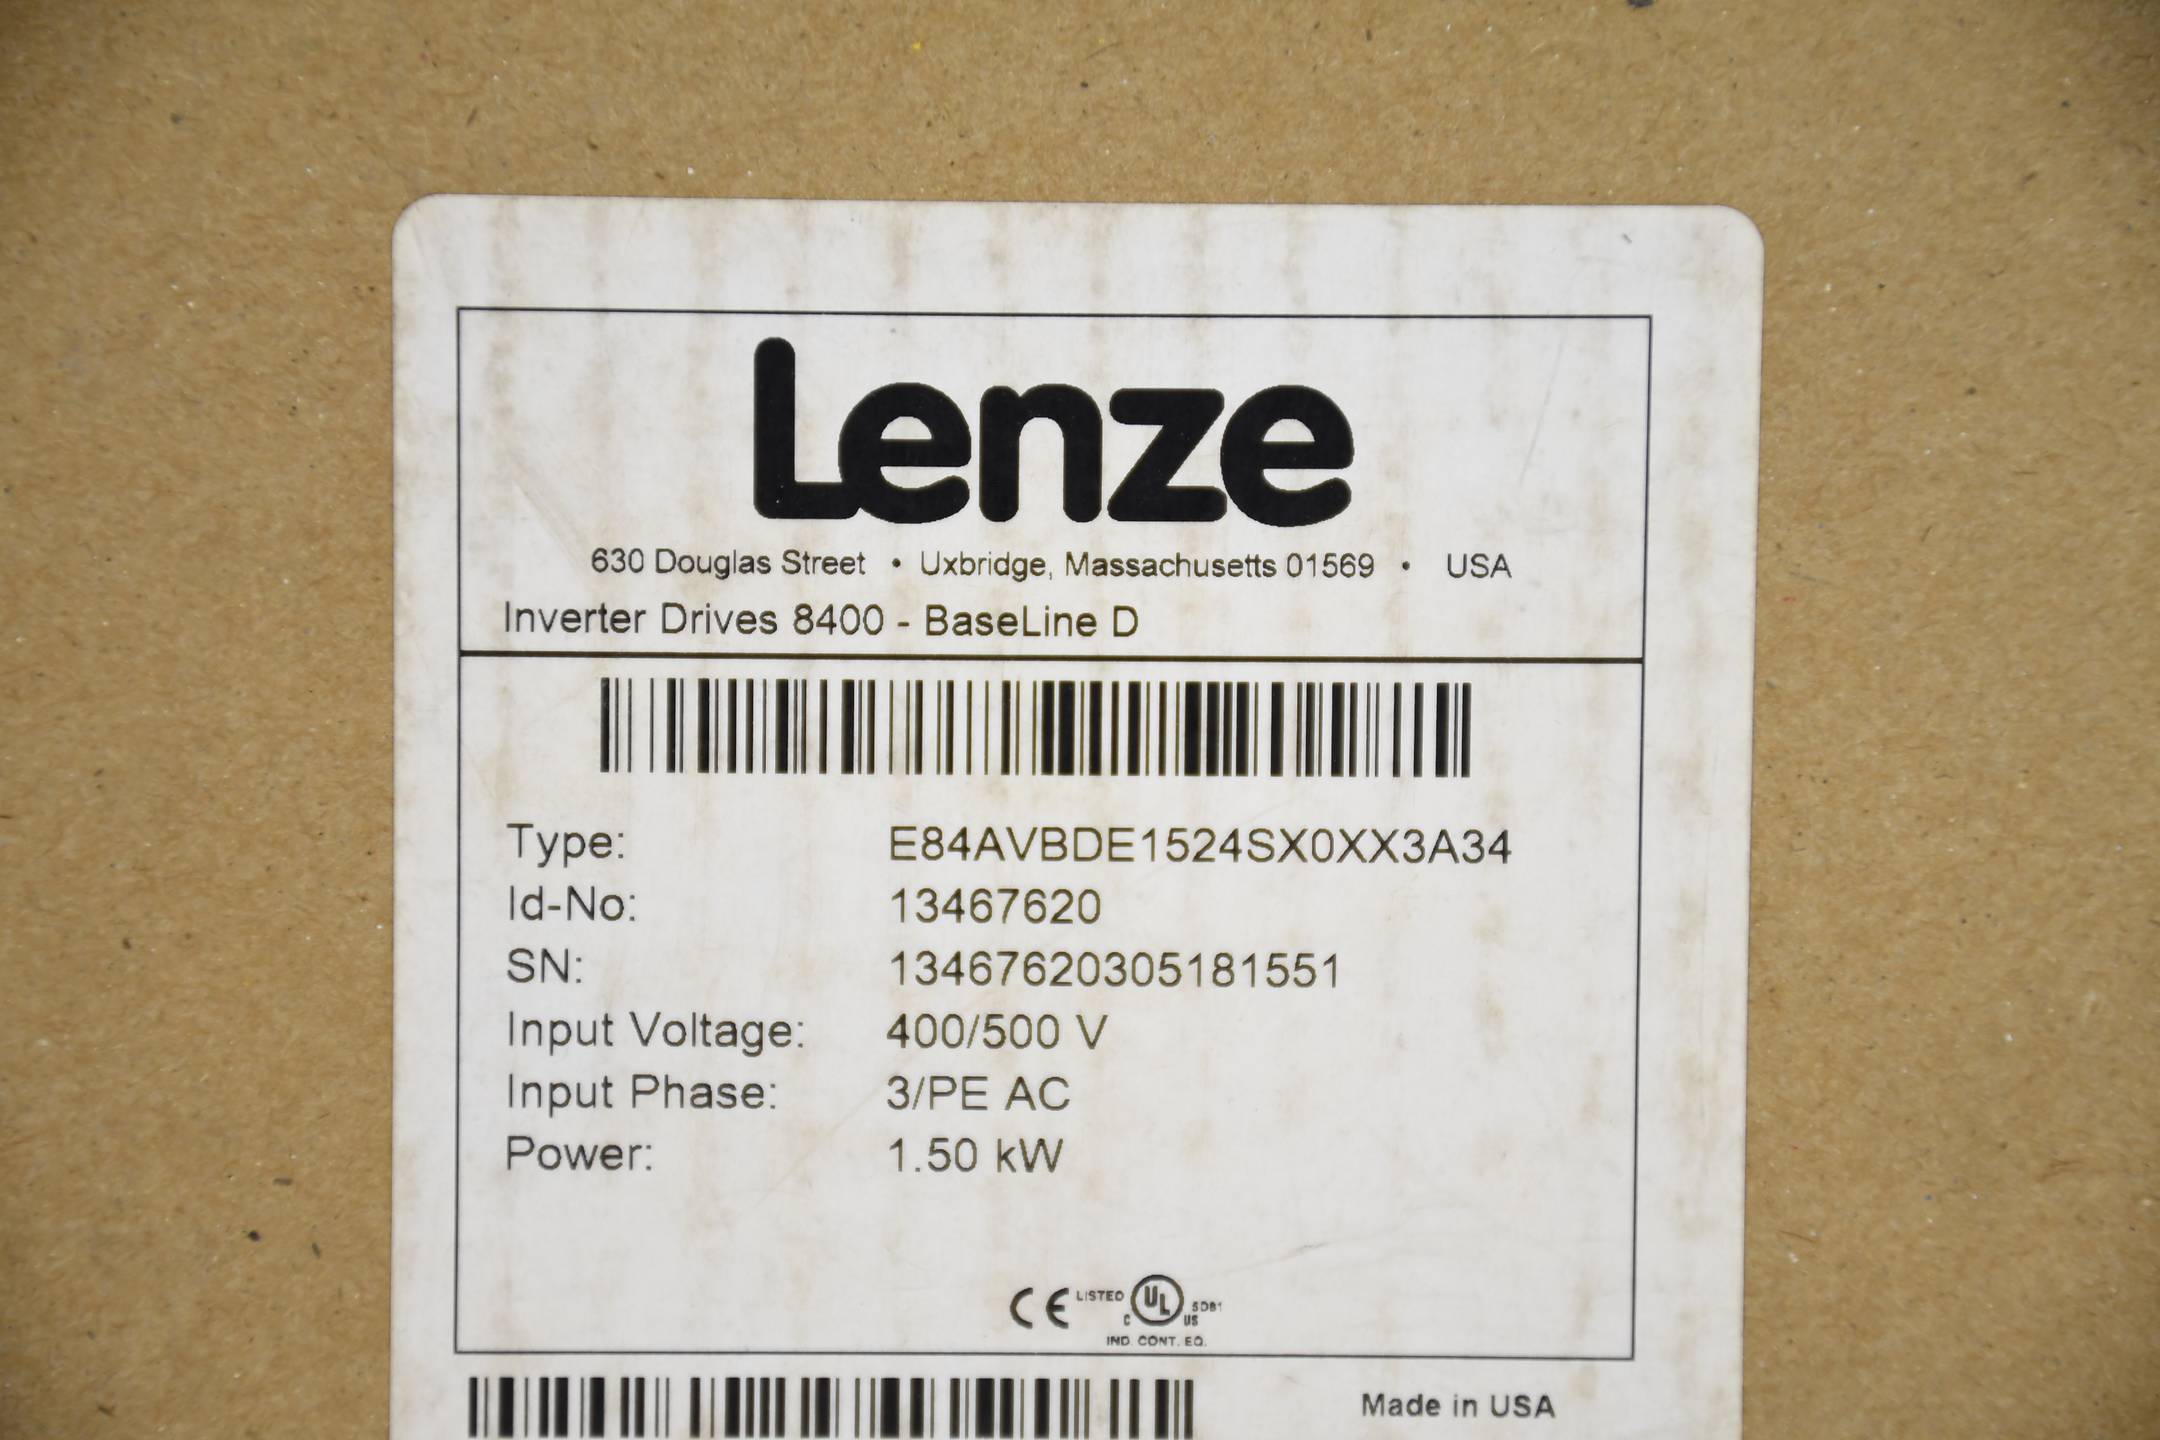 Lenze Inverter Drives 8400 BaseLine D E84AVBDE1524SX0XX3A34 (13467620 )